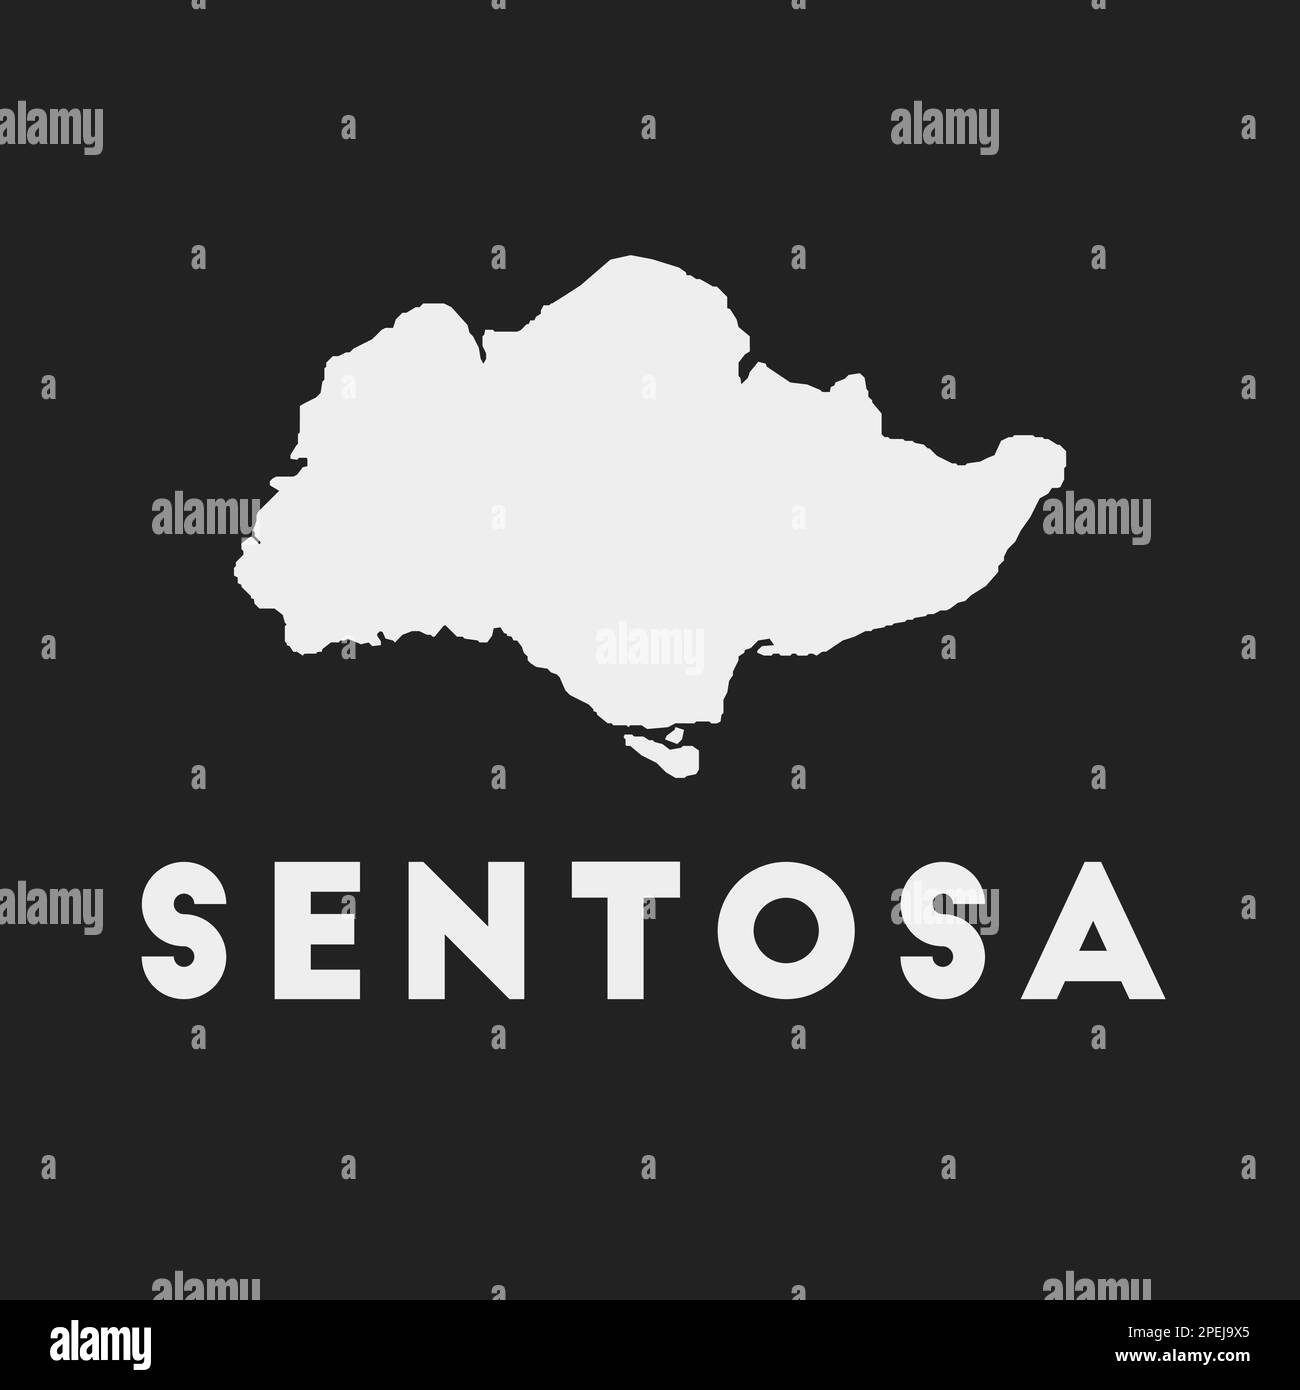 Sentosa icon. Island map on dark background. Stylish Sentosa map with island name. Vector illustration. Stock Vector